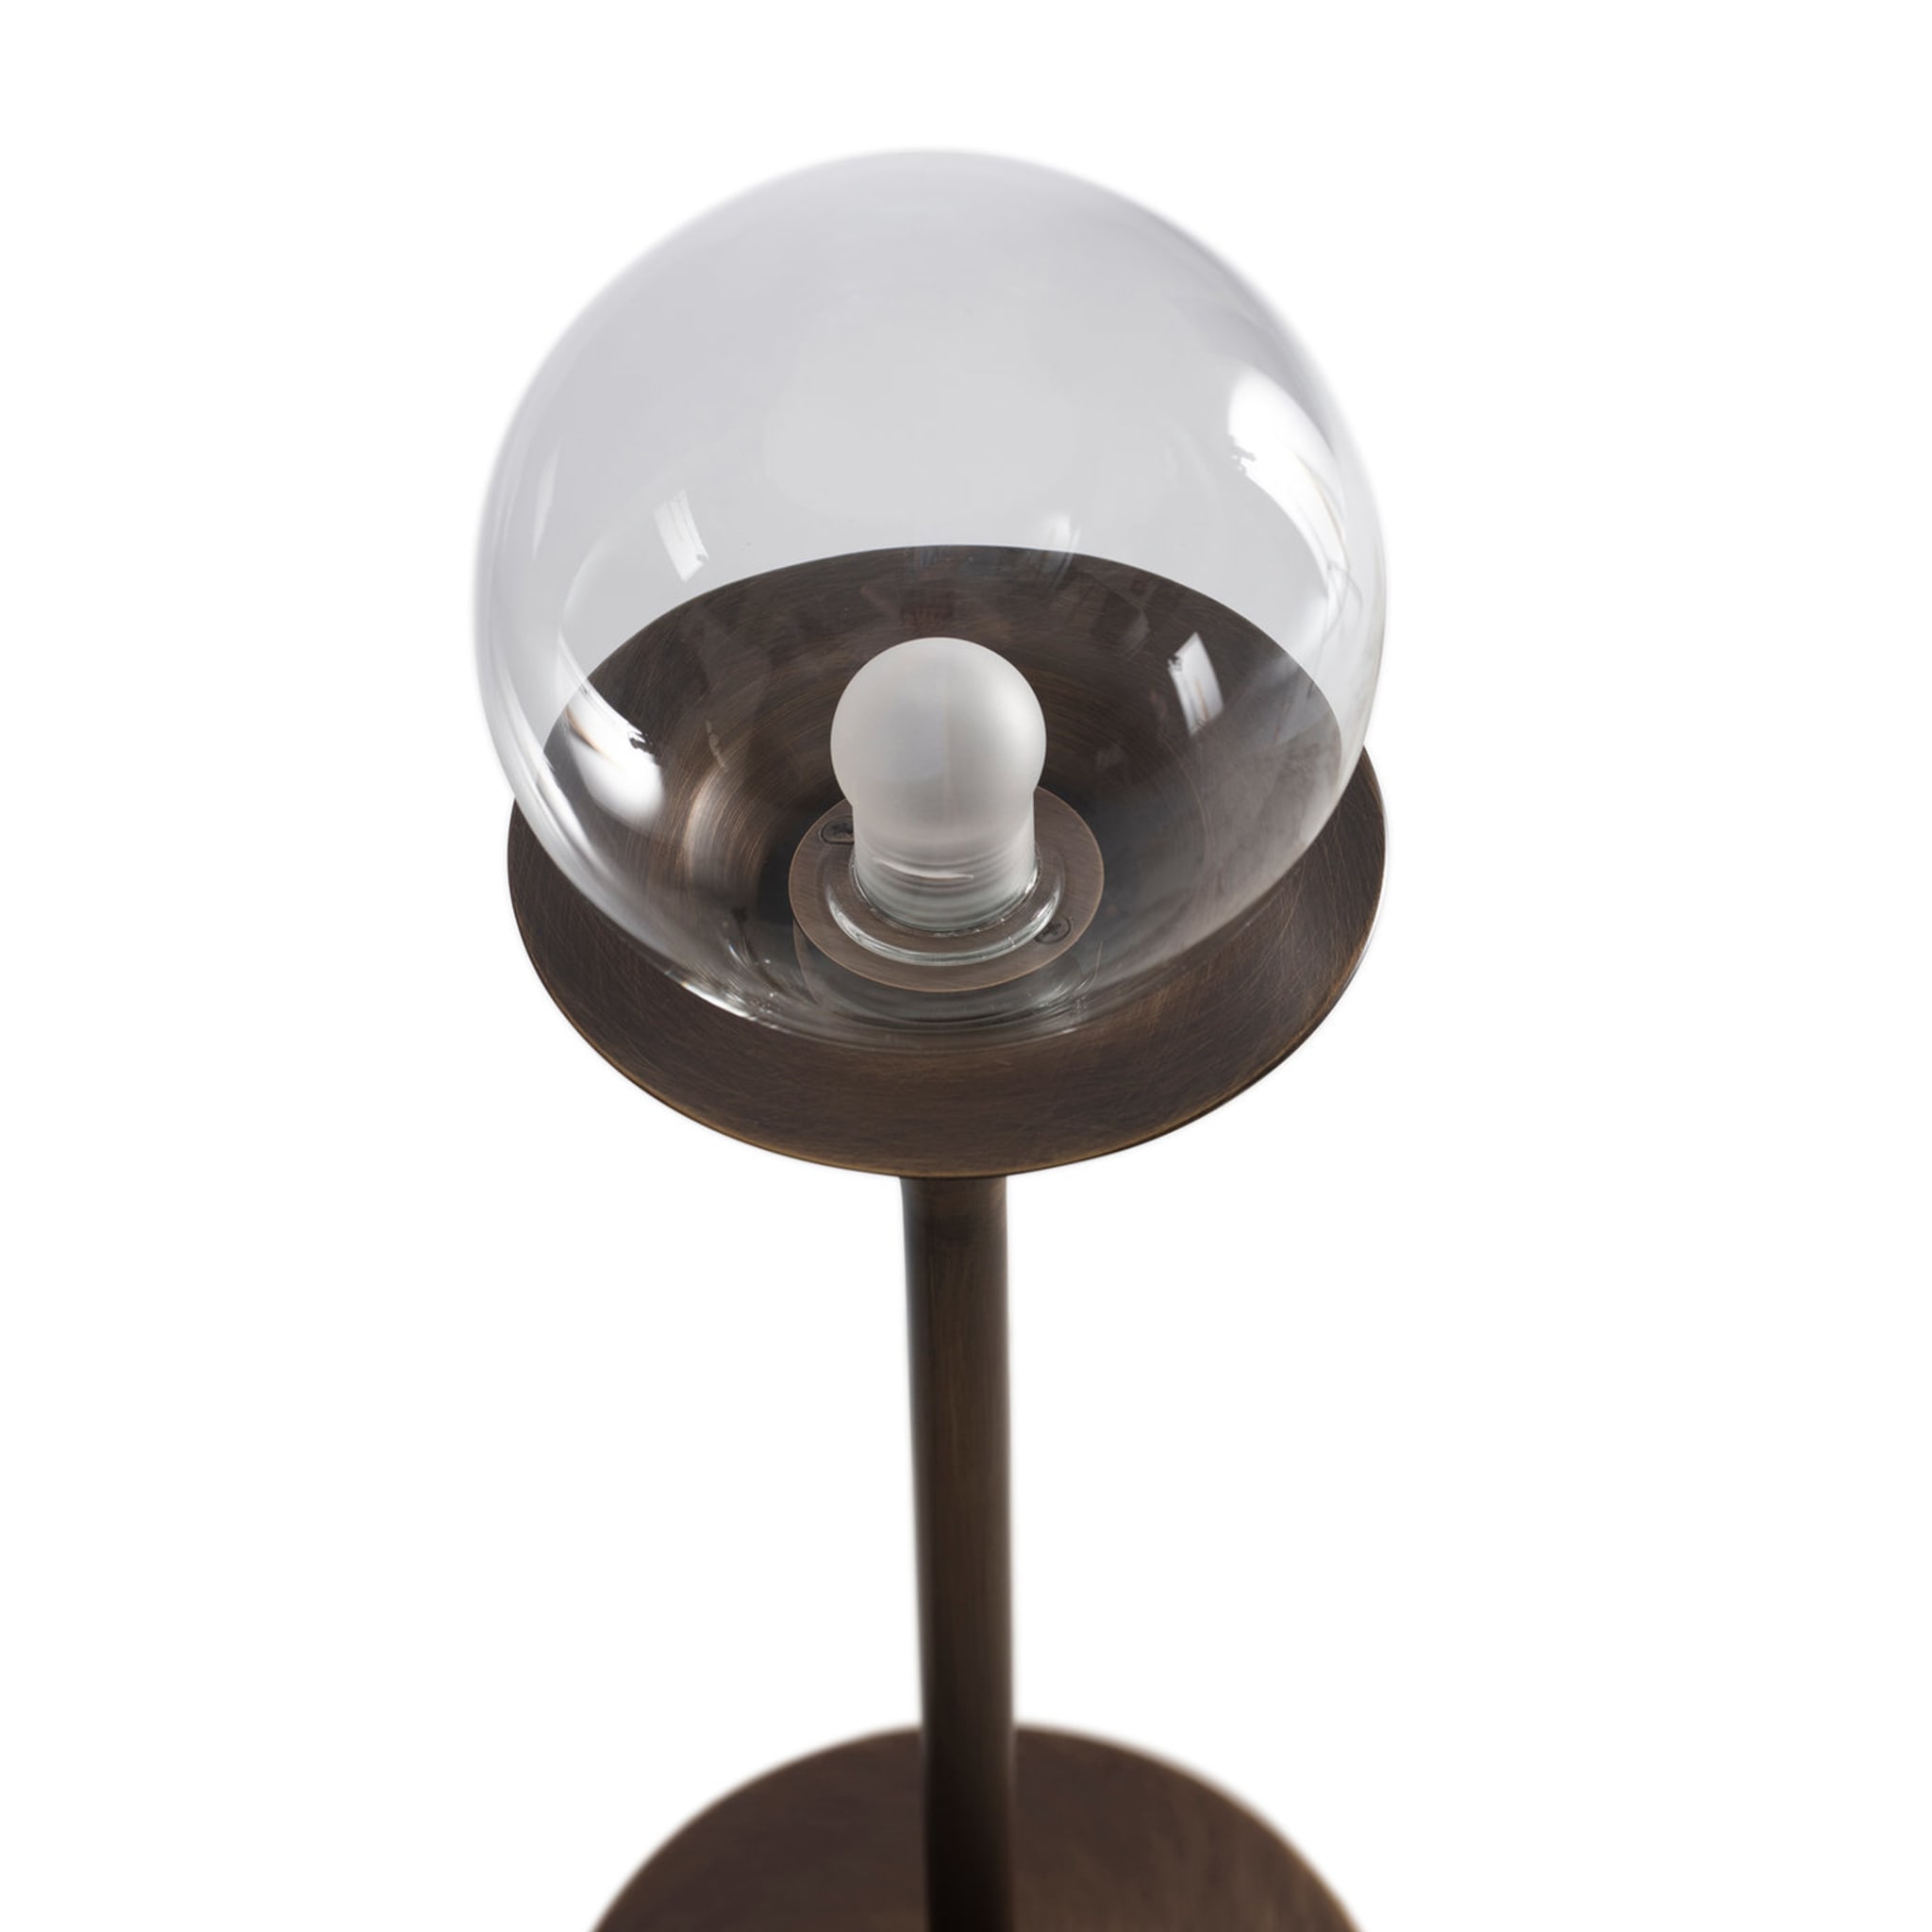 Bricola 01 Table Lamp by Ciarmoli Queda Studio - Alternative view 1